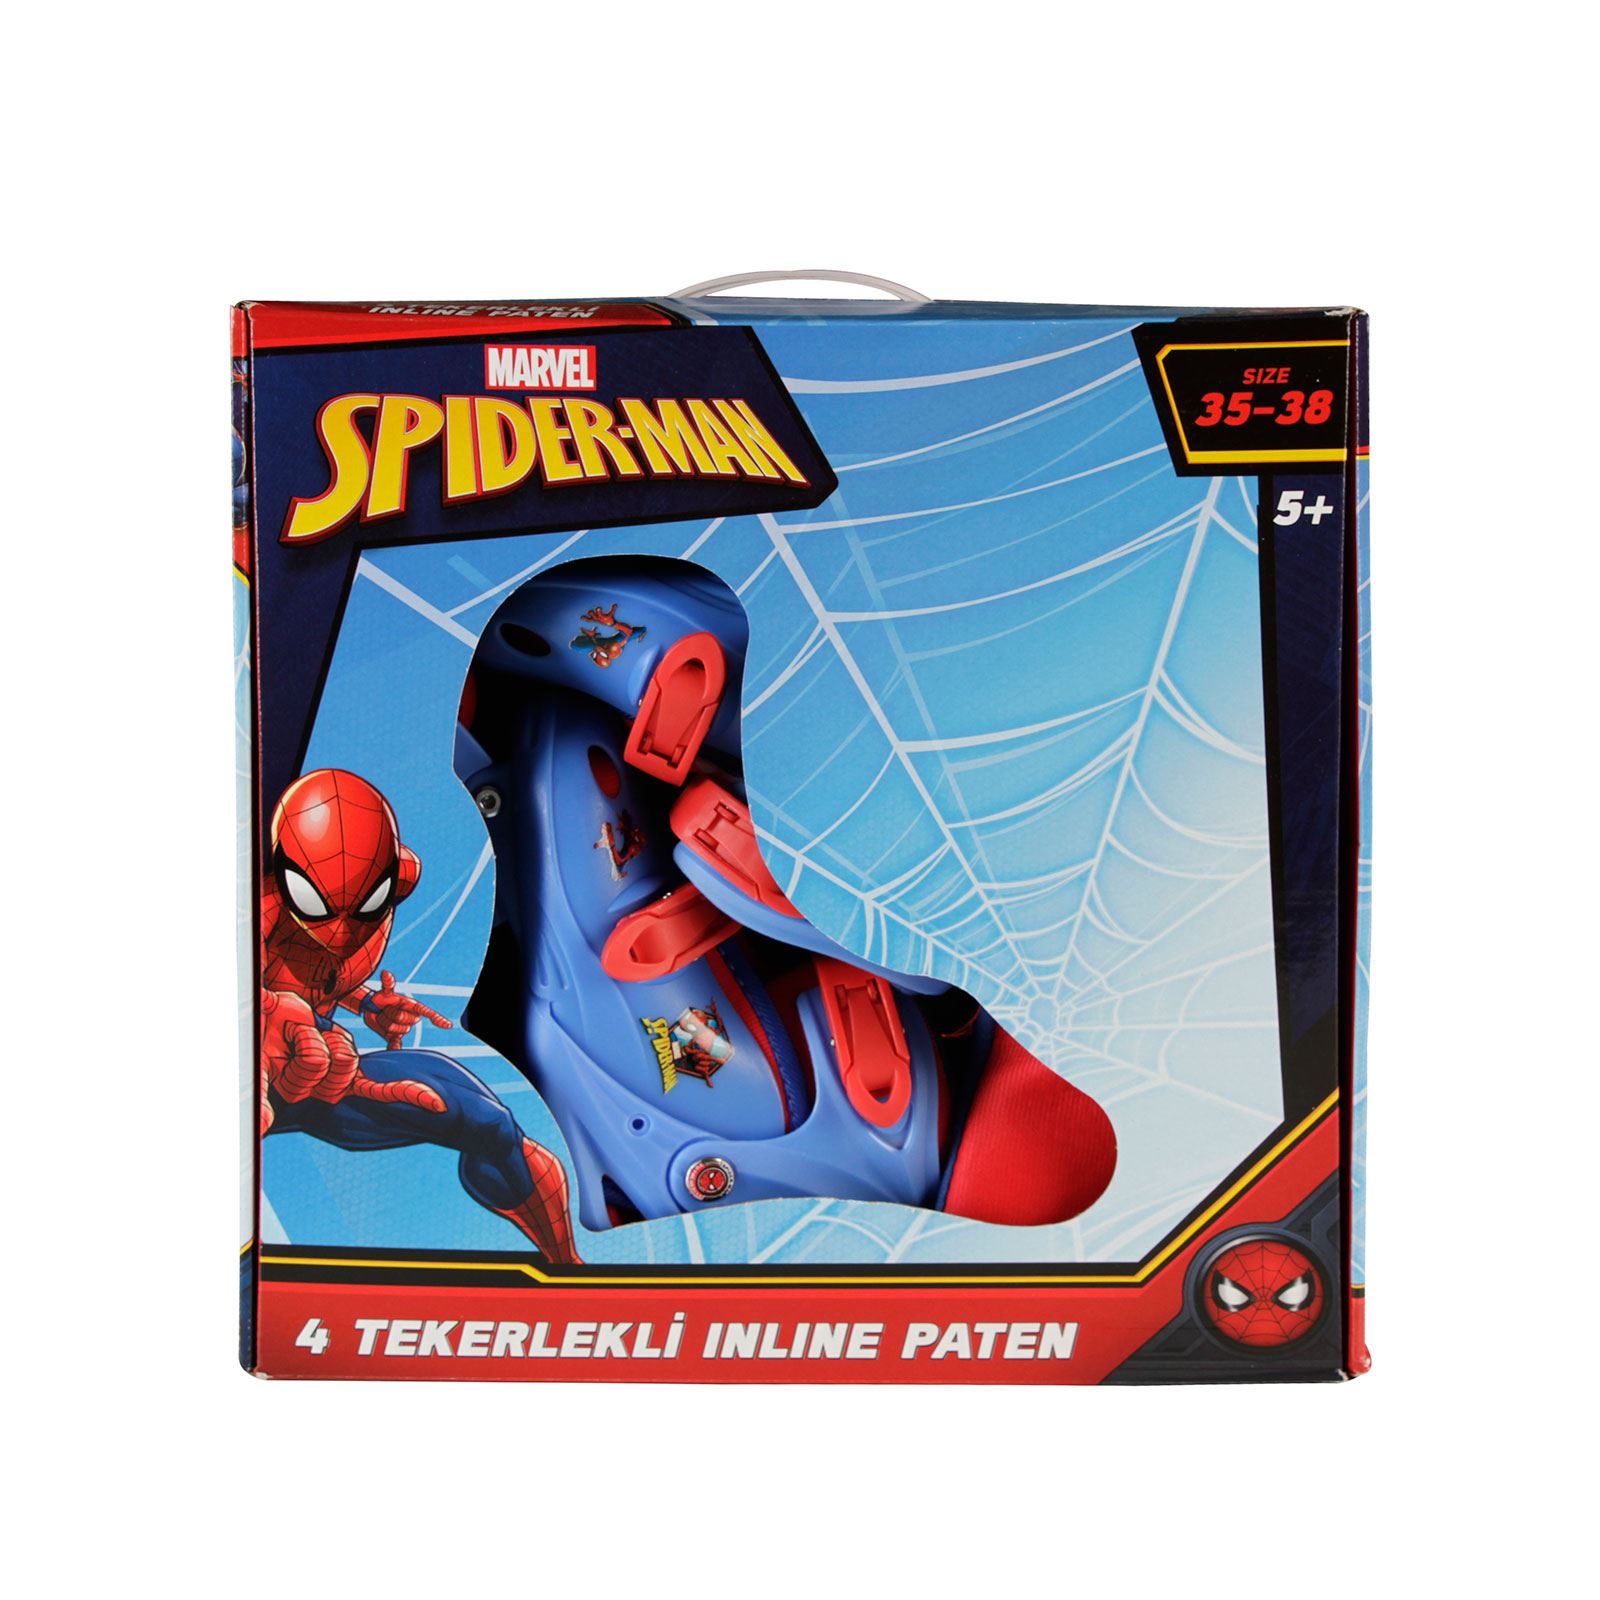 Spiderman 4 Teker Inline Ayarlanabilir Paten 35-38 Numara